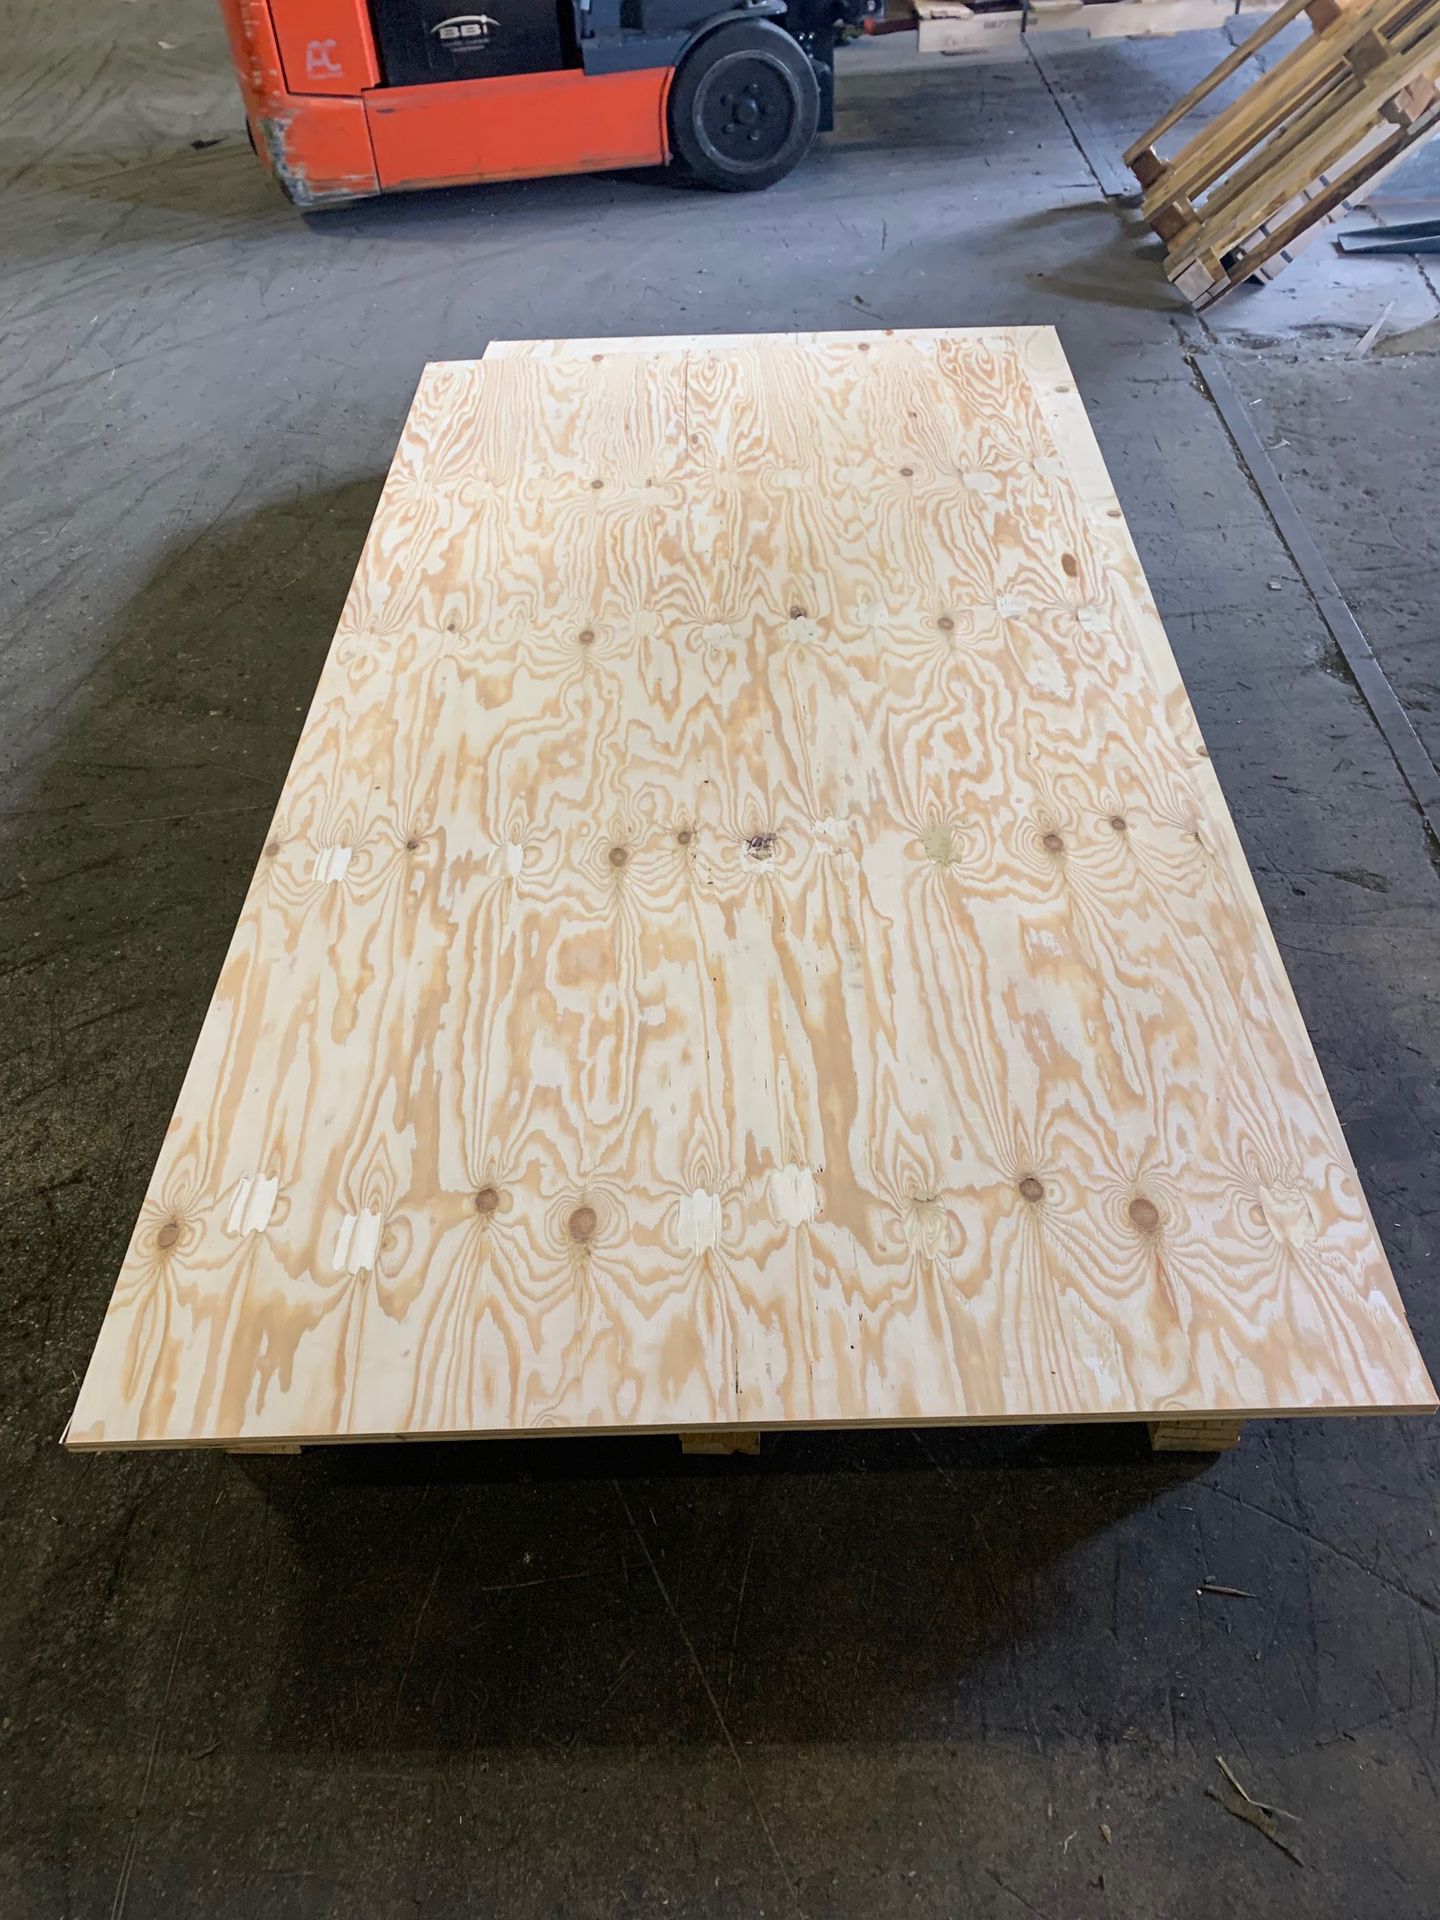 5/8 Cdx Plywood Yp 4x8 (19/32)